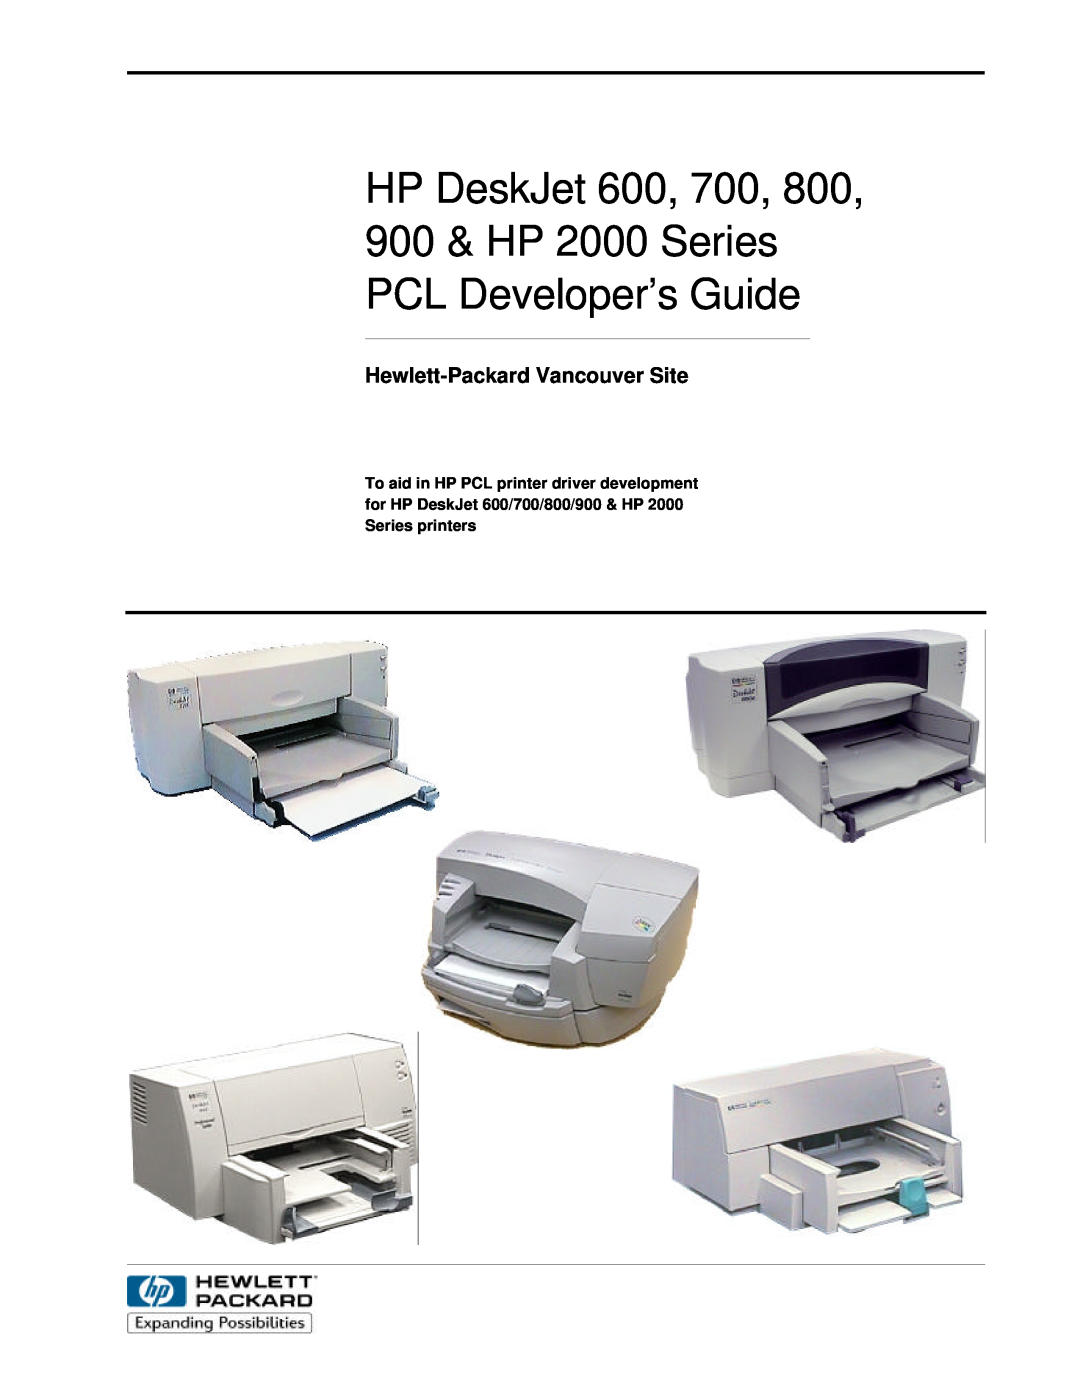 HP 800 manual HP DeskJet 600, 700 900 & HP 2000 Series PCL Developer’s Guide, Hewlett-Packard Vancouver Site 